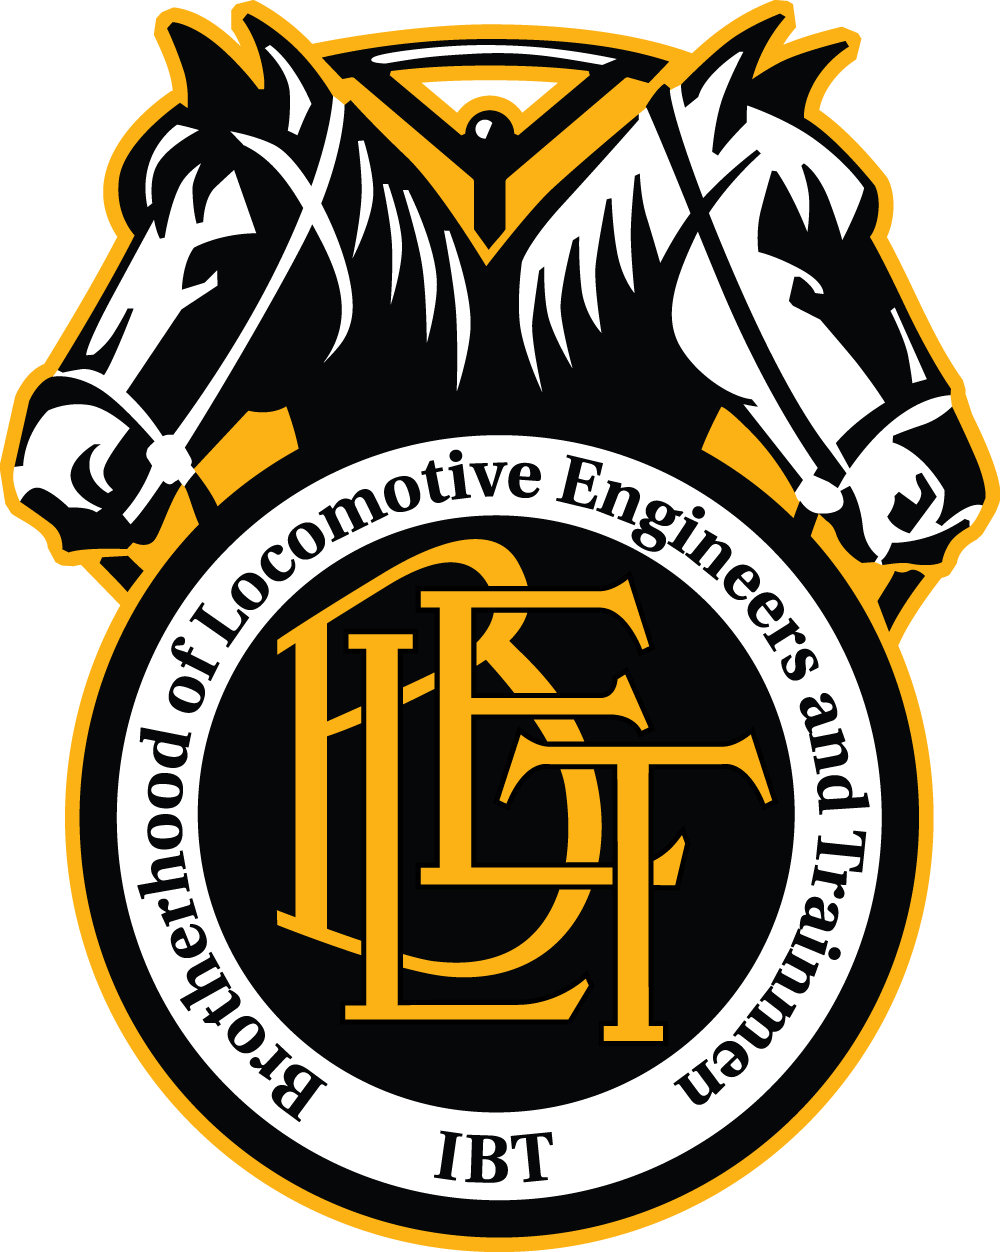 Brotherhood of Locomotive Engineers and Trainmen